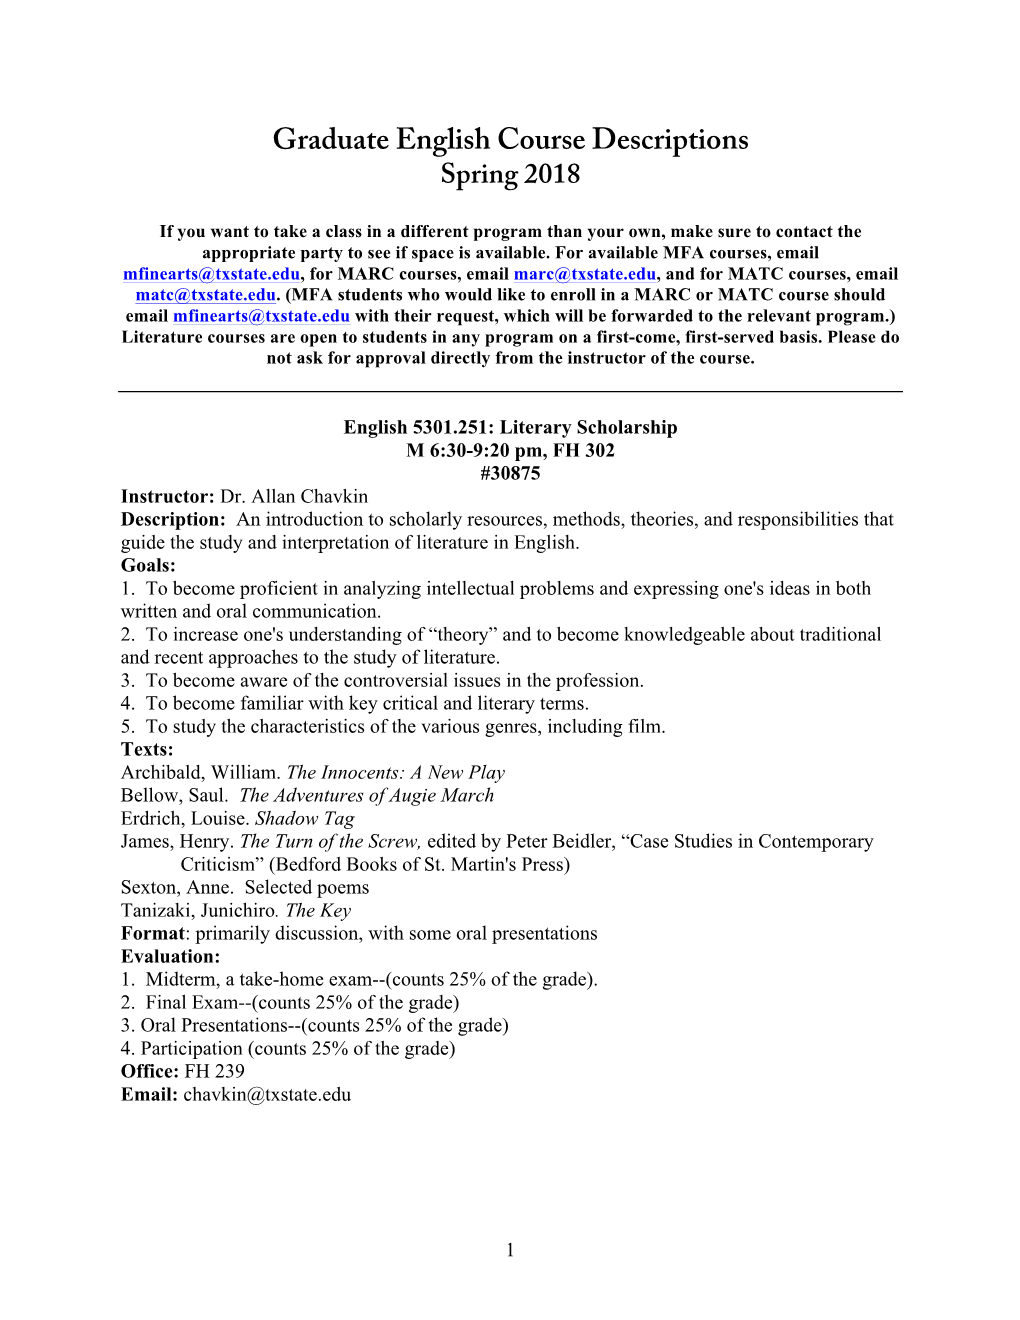 Graduate English Course Descriptions Spring 2018